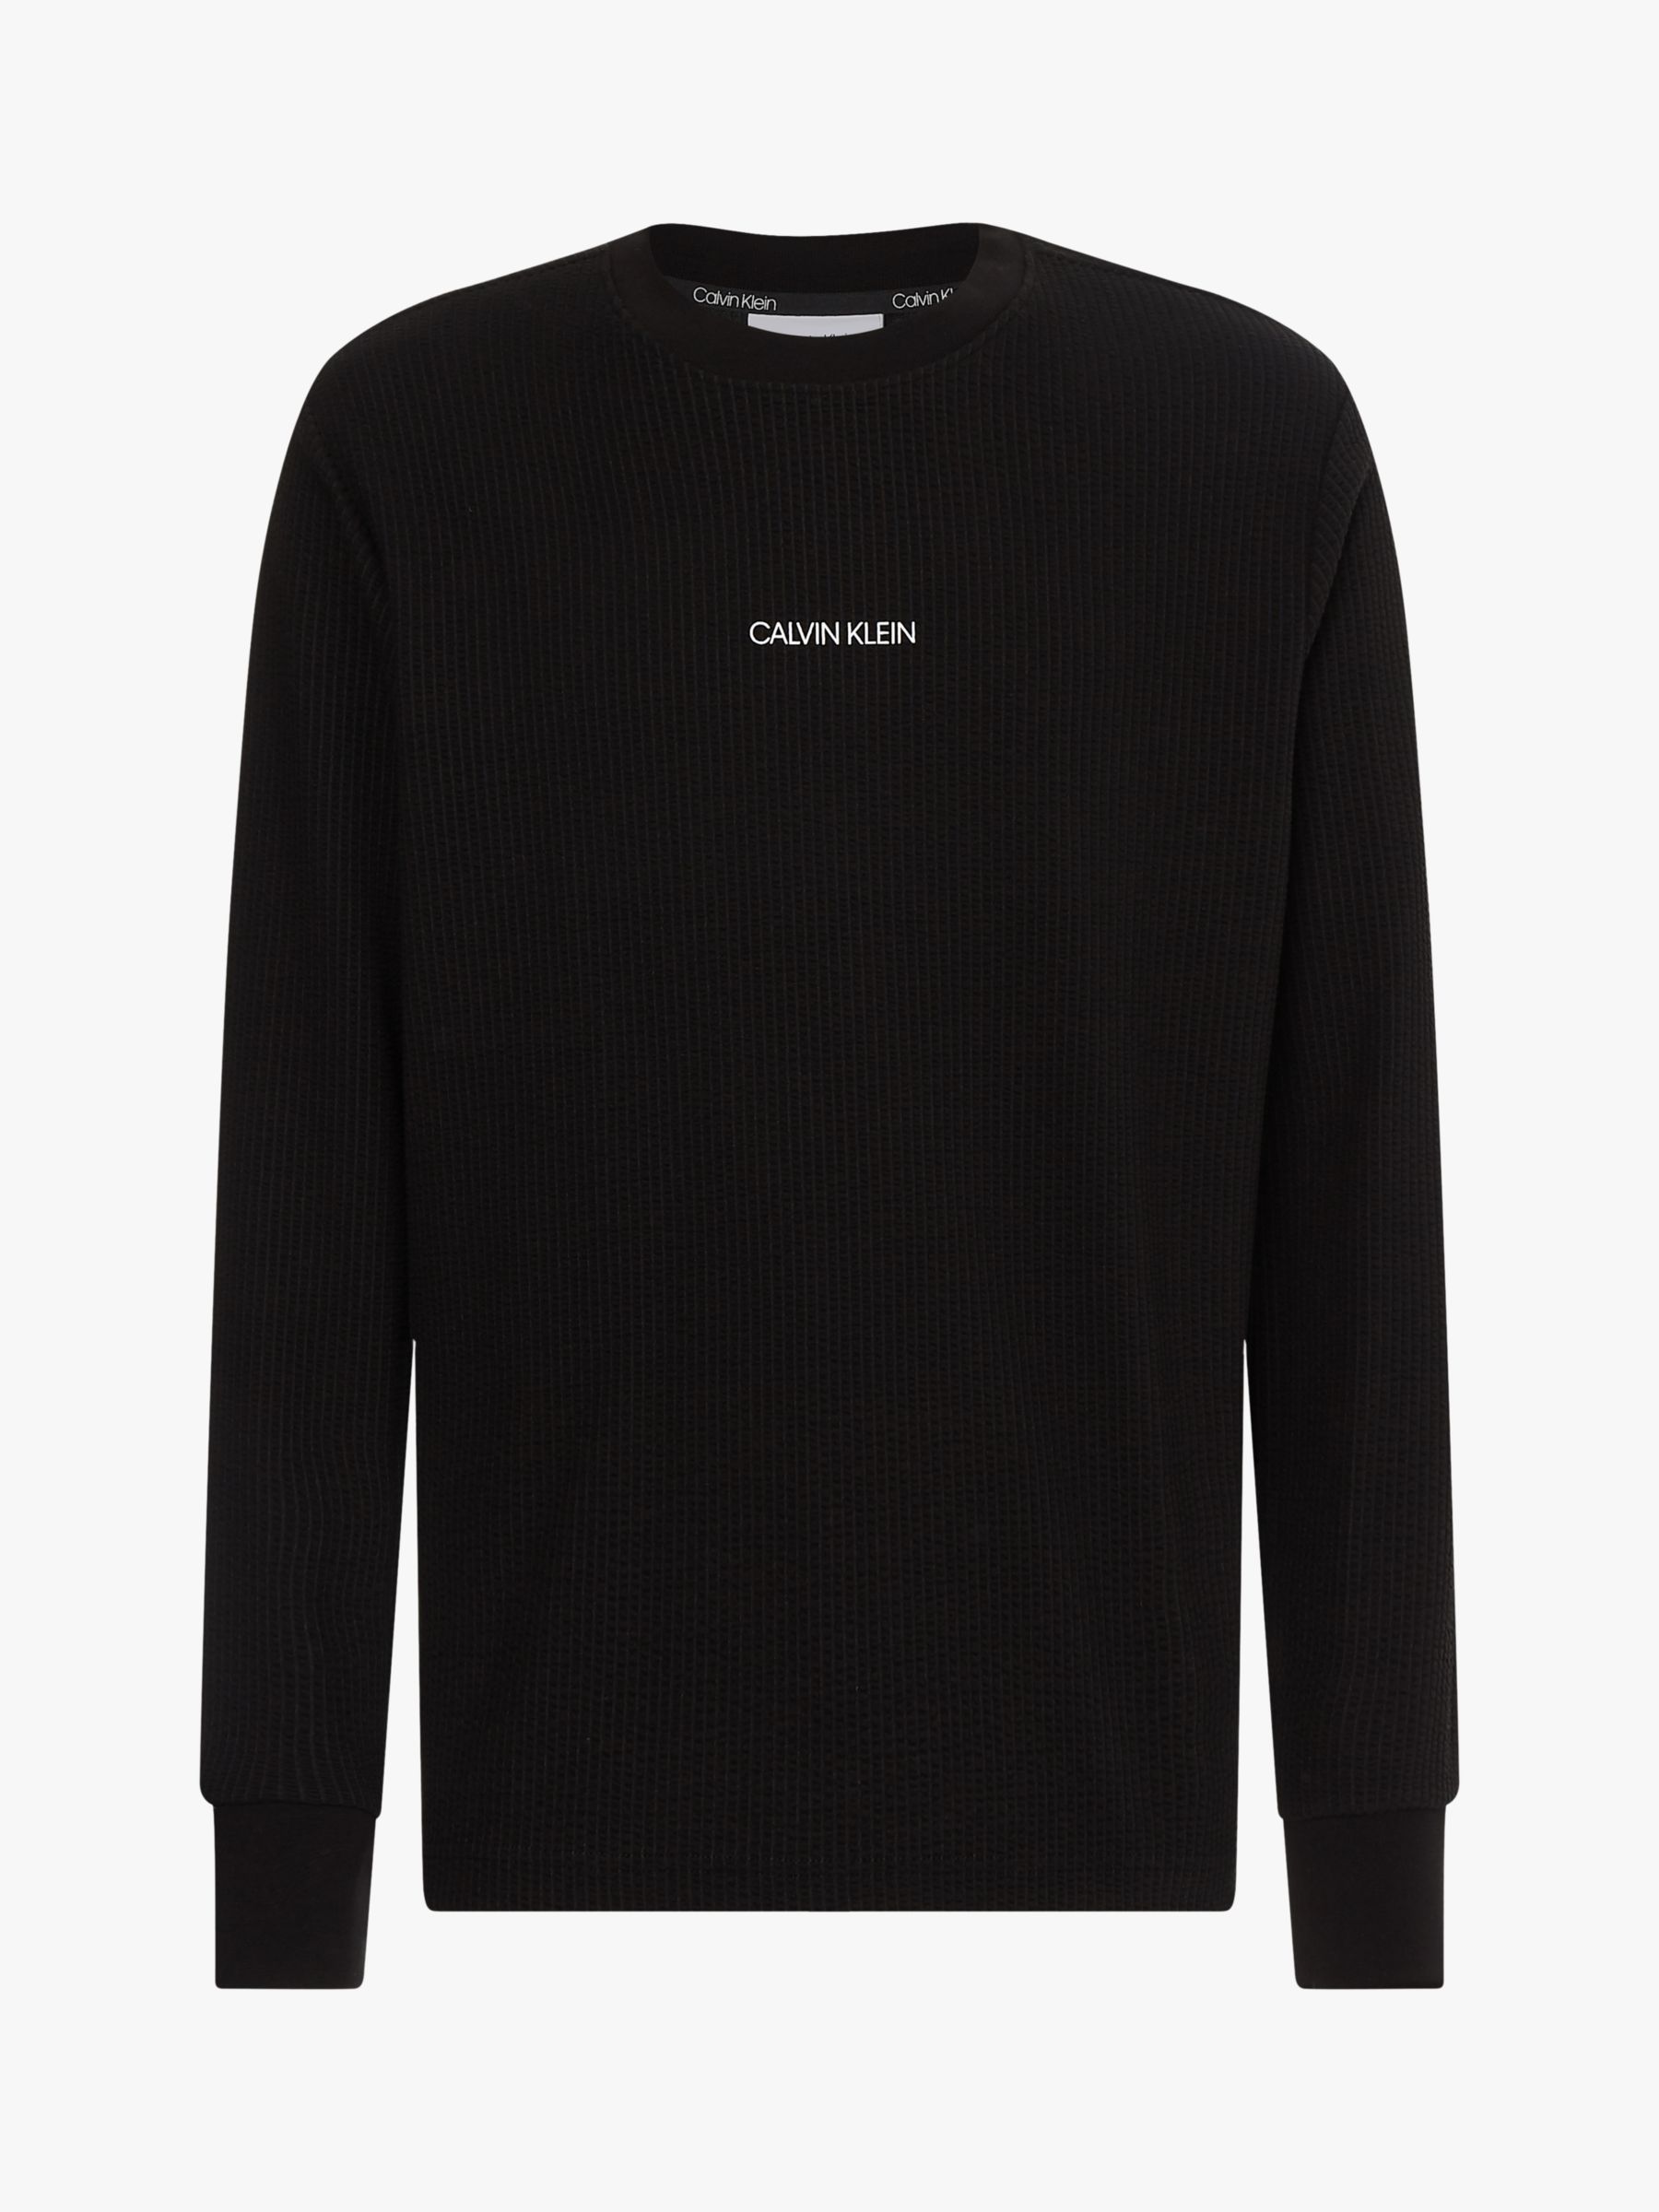 Calvin Klein Lightweight Logo Sweatshirt, CK Black M male 60% organic cotton, 40% polyester